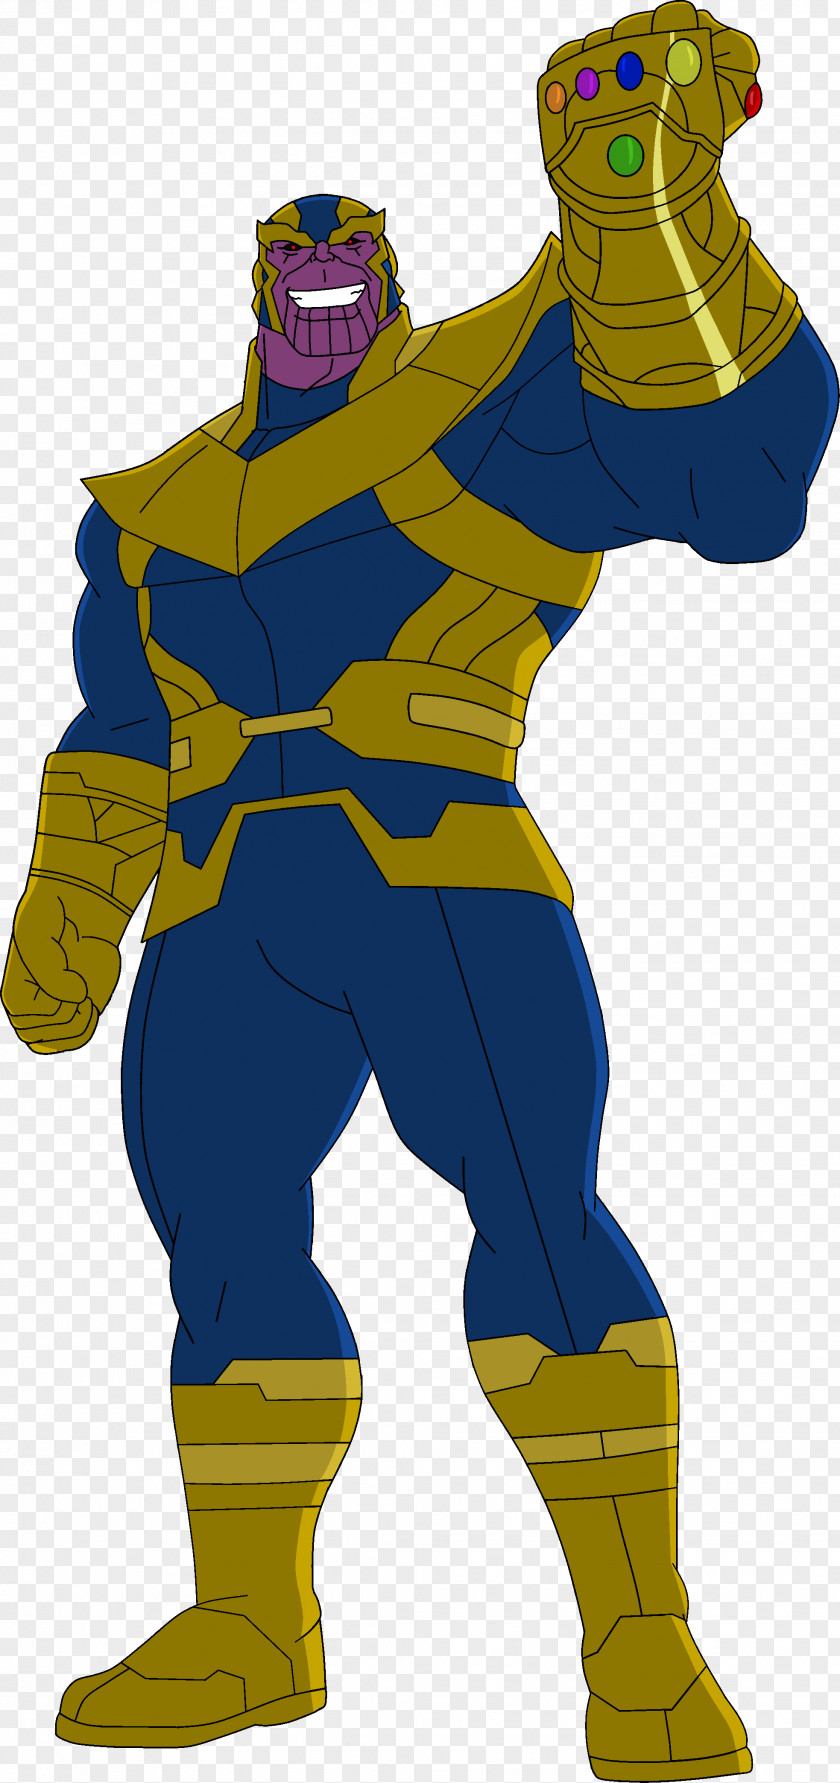 Thanos Cartoon Black Widow Ant-Man Deadpool PNG